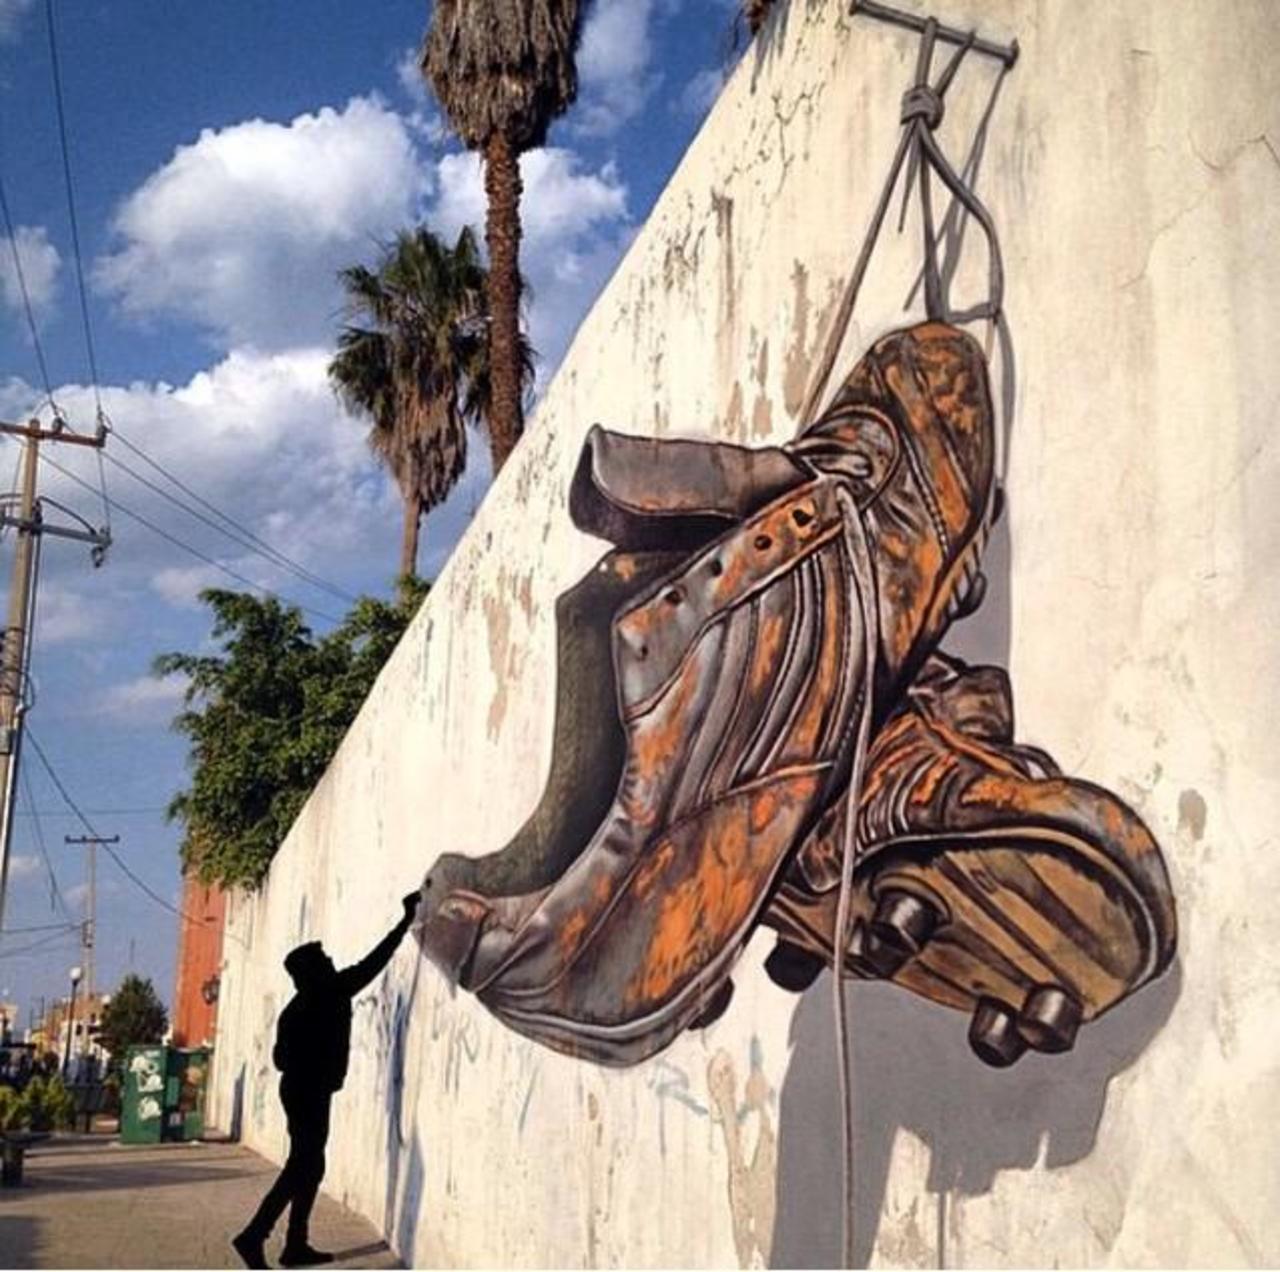 Awesome anamorphic 3D Street Art by Juandres Vera 

#art #graffiti #mural #streetart http://t.co/GO7KODh7BF